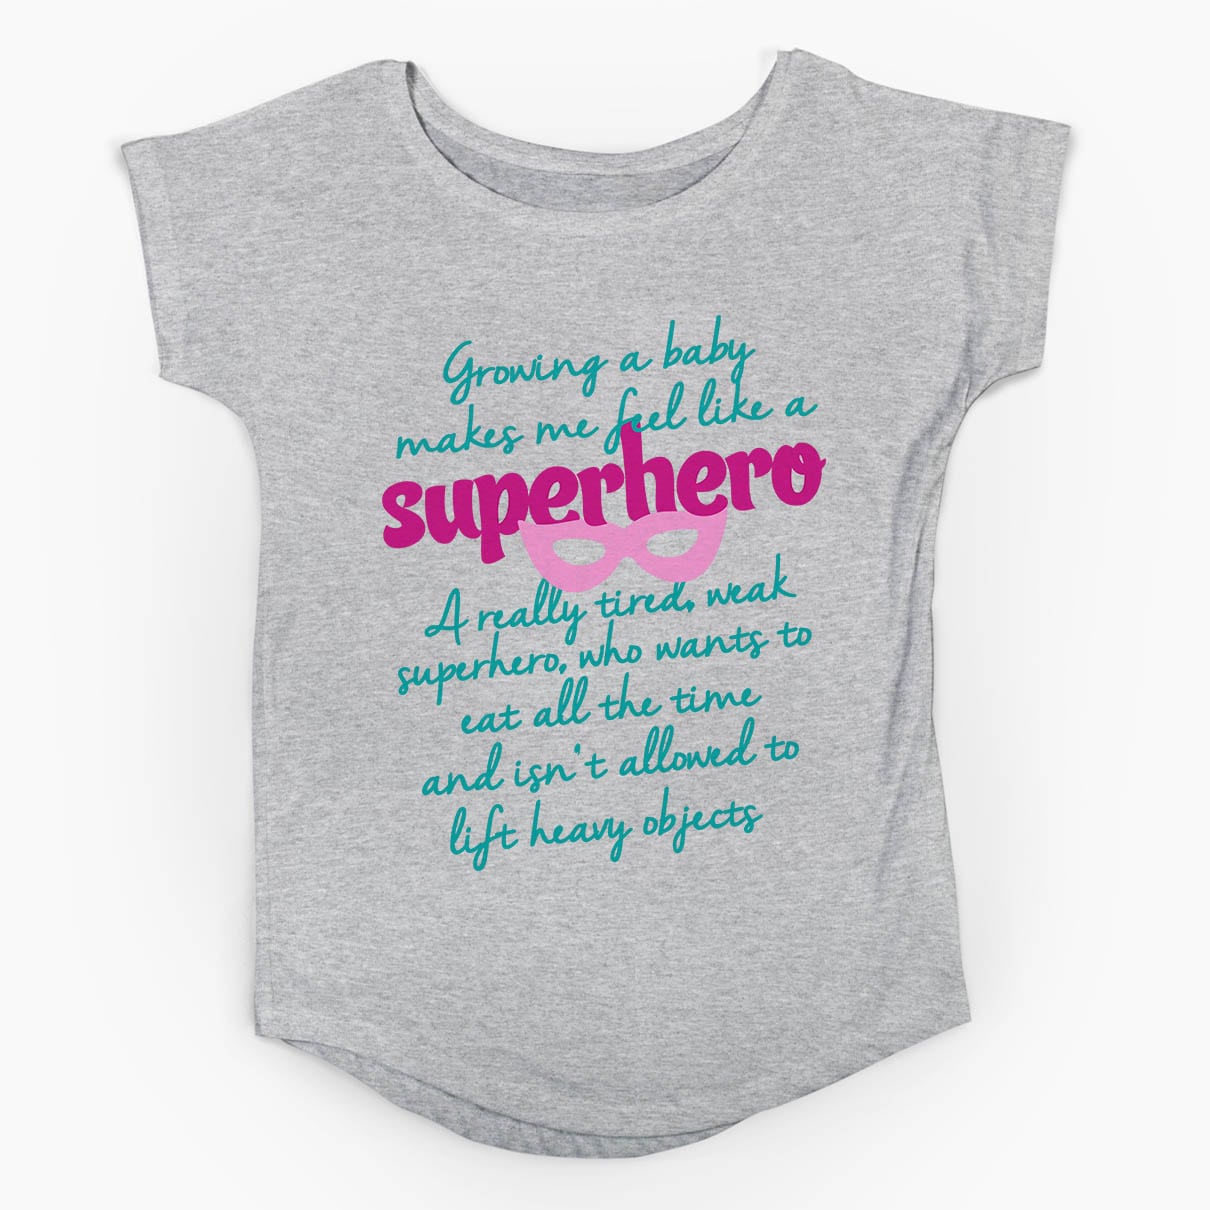 Tricouri gravide Superhero -1 tiparo.ro